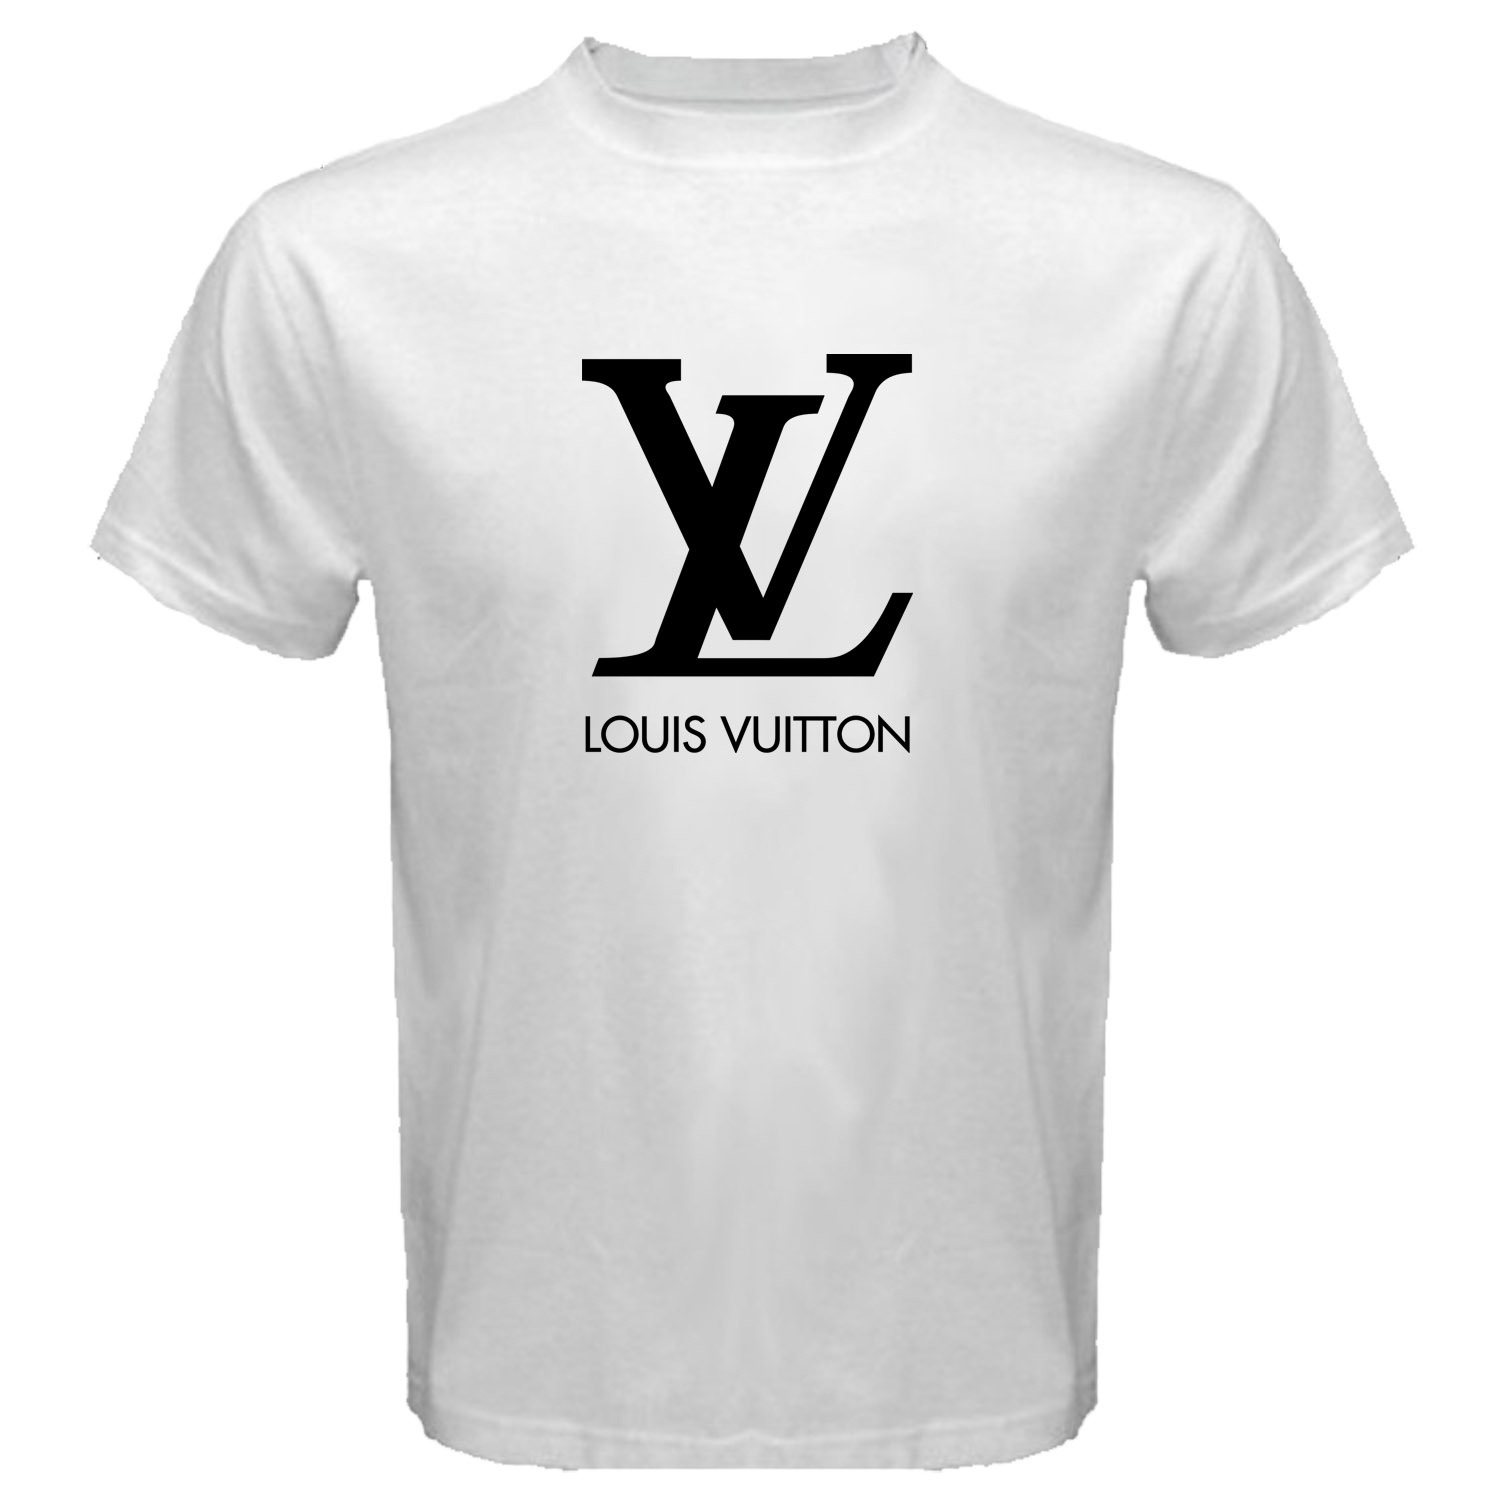 Louis Vuitton T-shirt: 17 listings